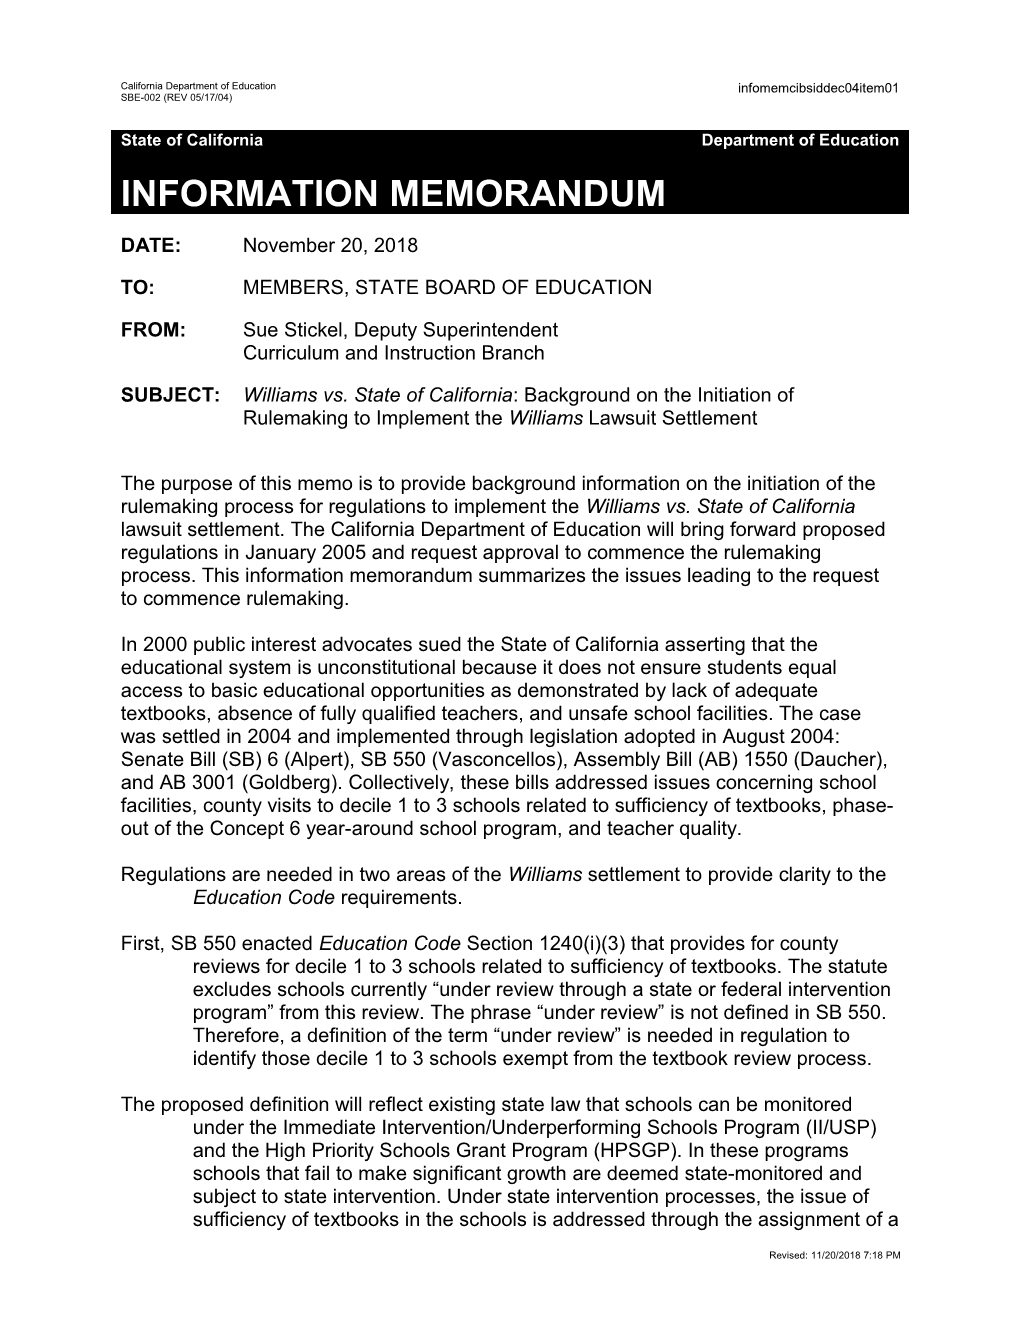 December 2004 SID Item 1 - Information Memorandum (CA State Board of Education)